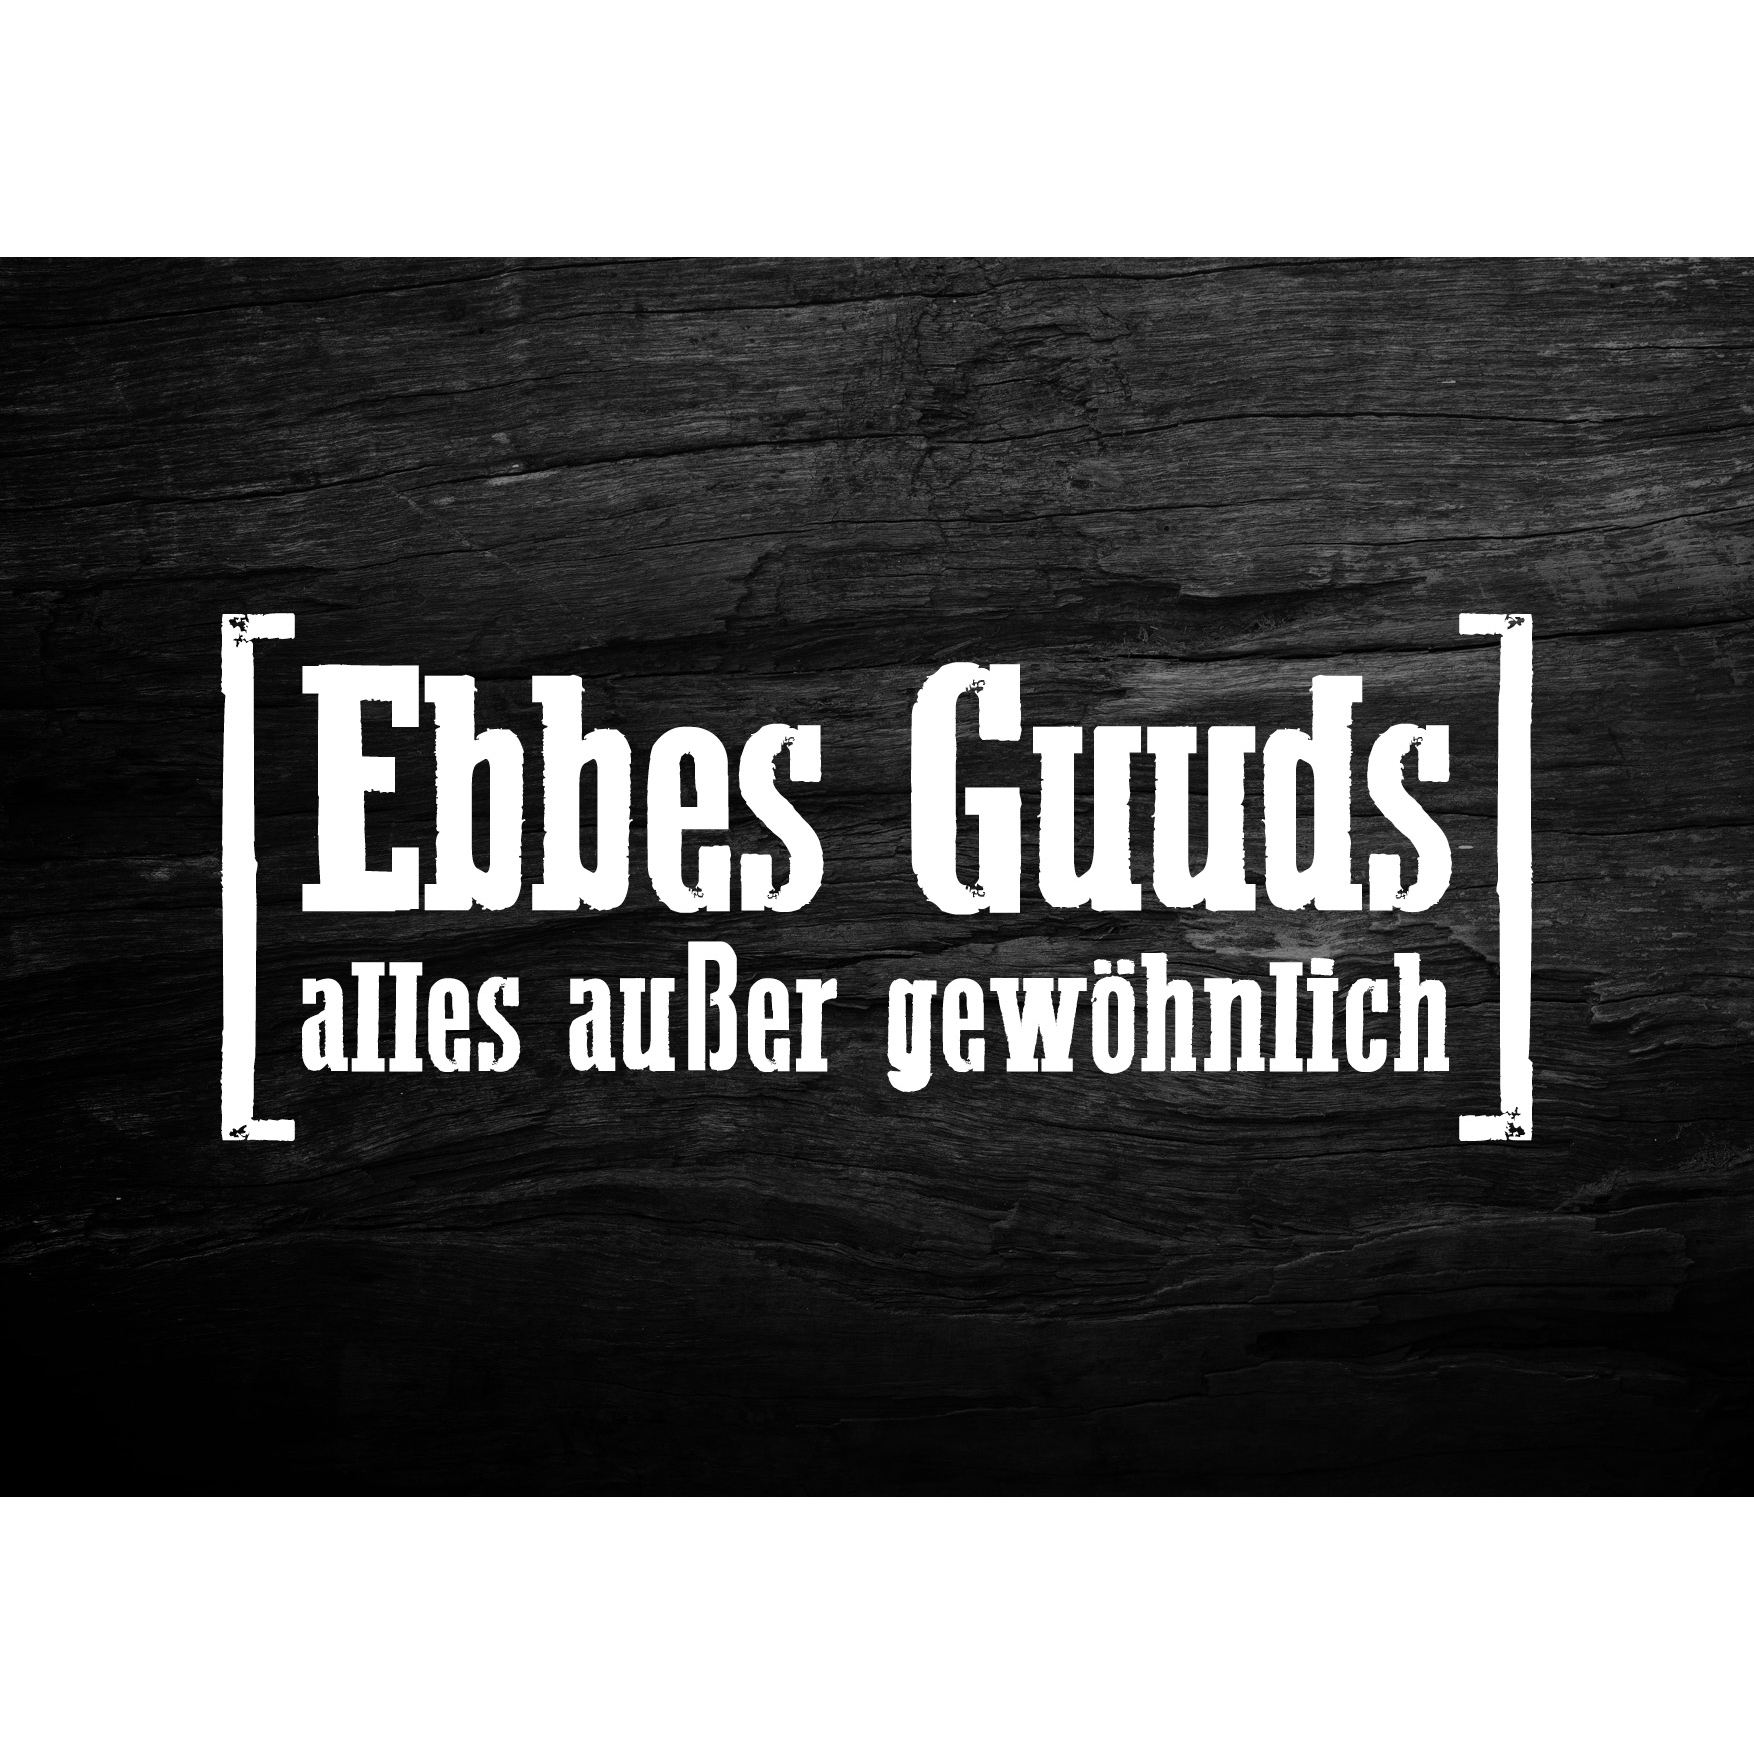 Logo Ebbes Guuds